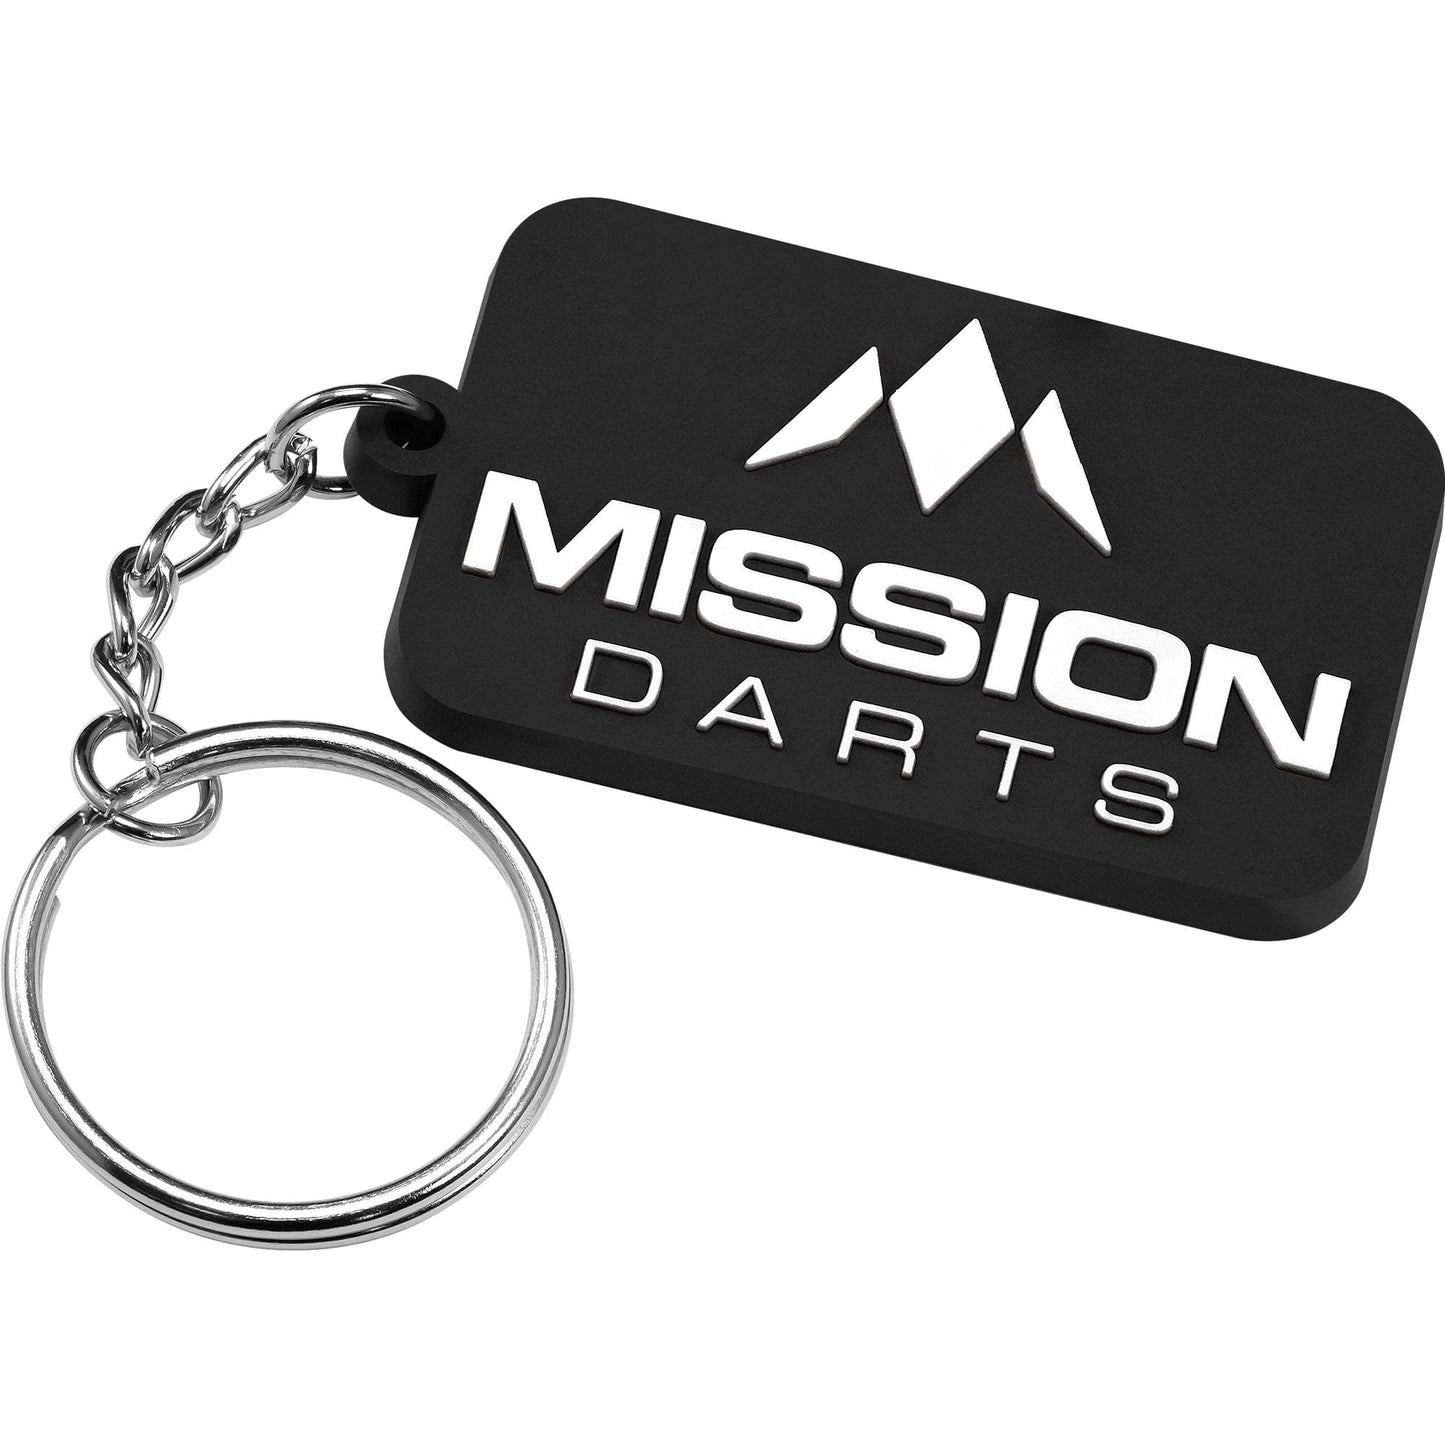 *Mission Logo Keyring - Soft PVC Feel White